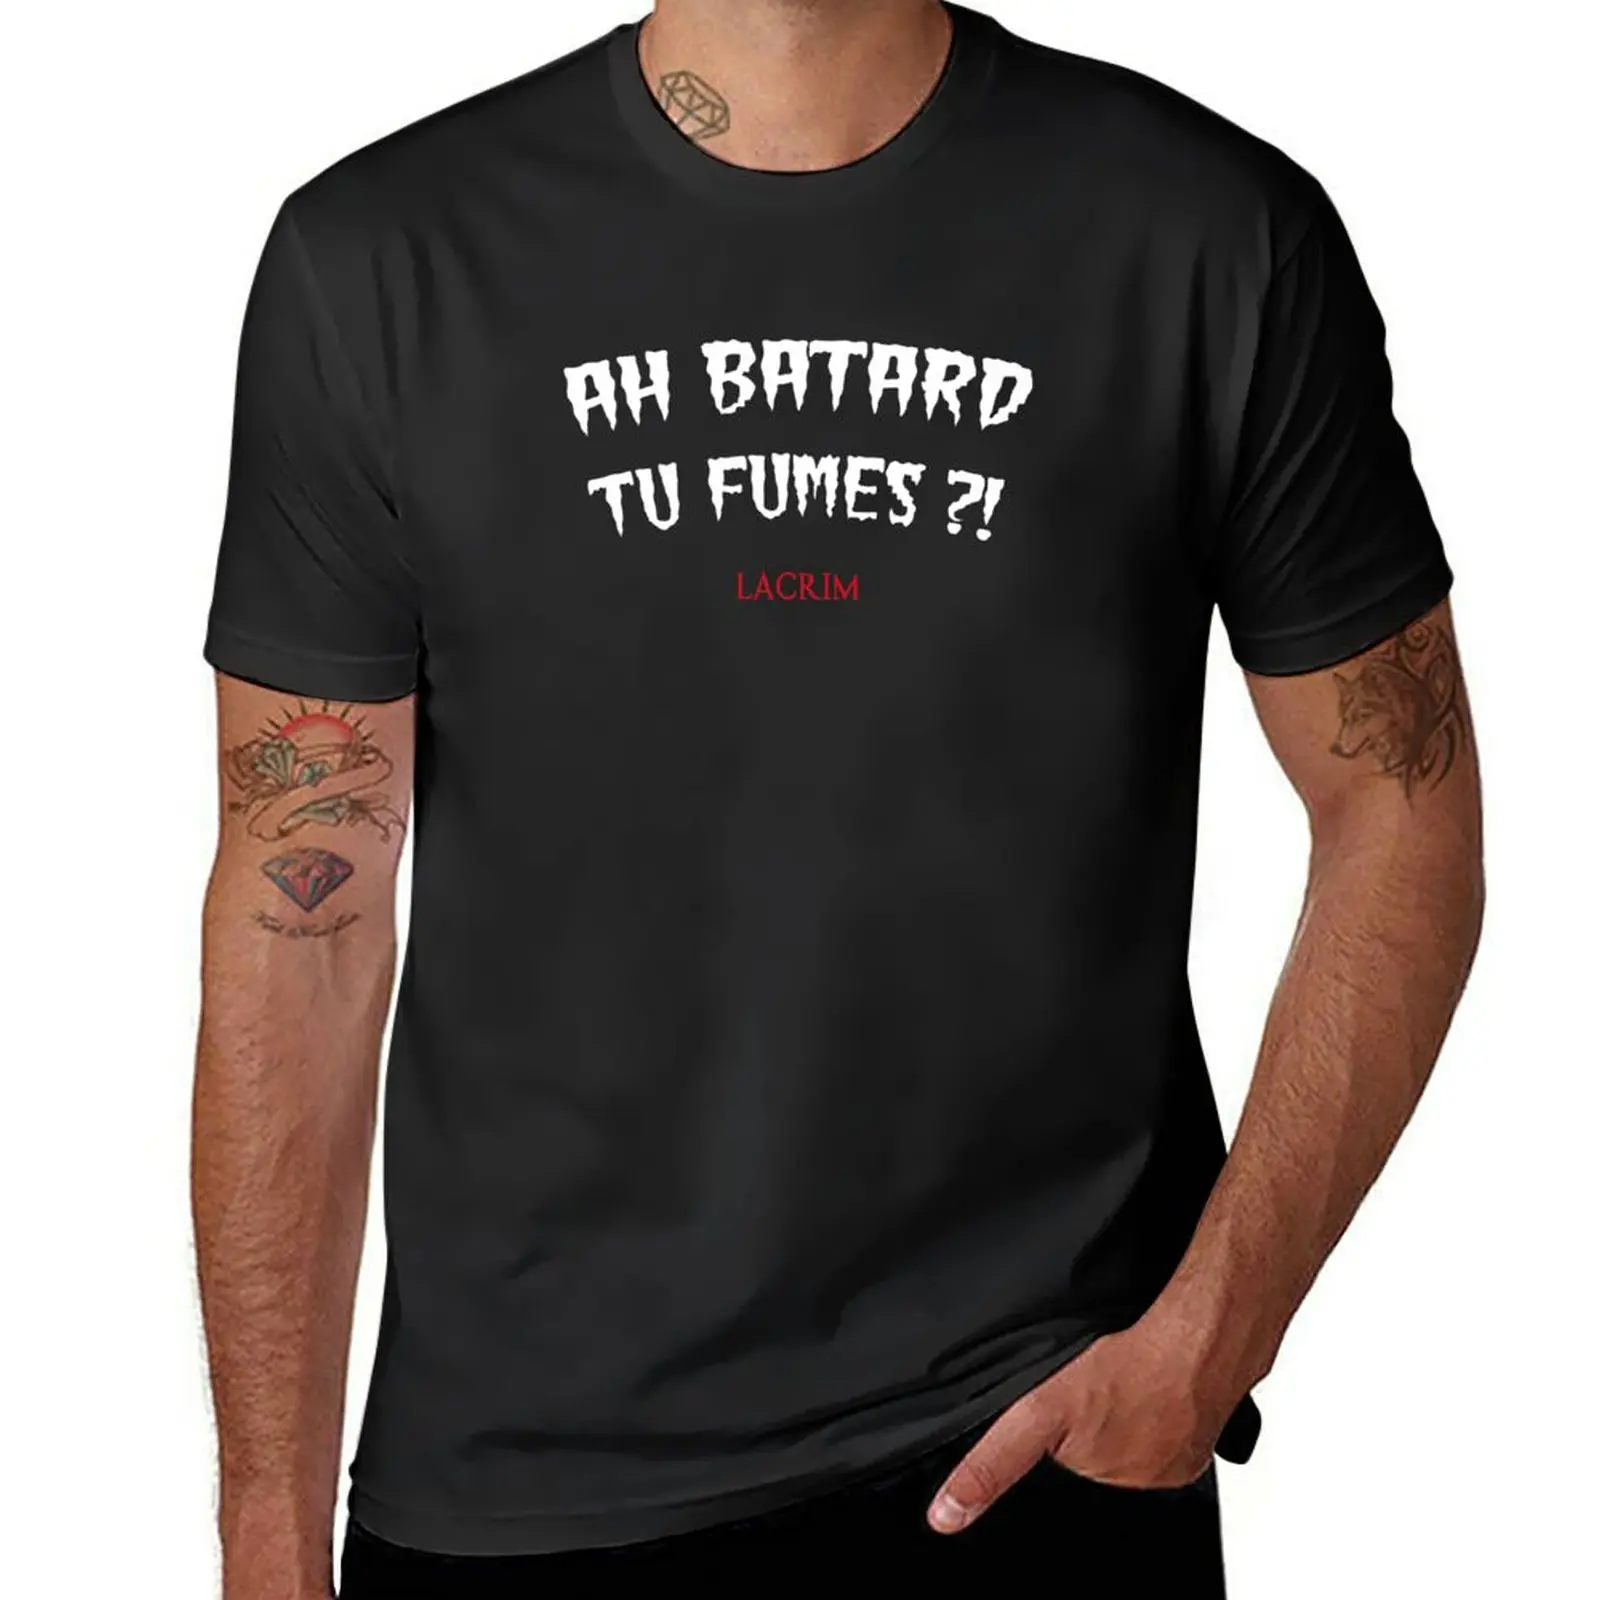 

New ah batard tu fumes ! T-Shirt T-shirt short anime clothes Short t-shirt tees t shirts men